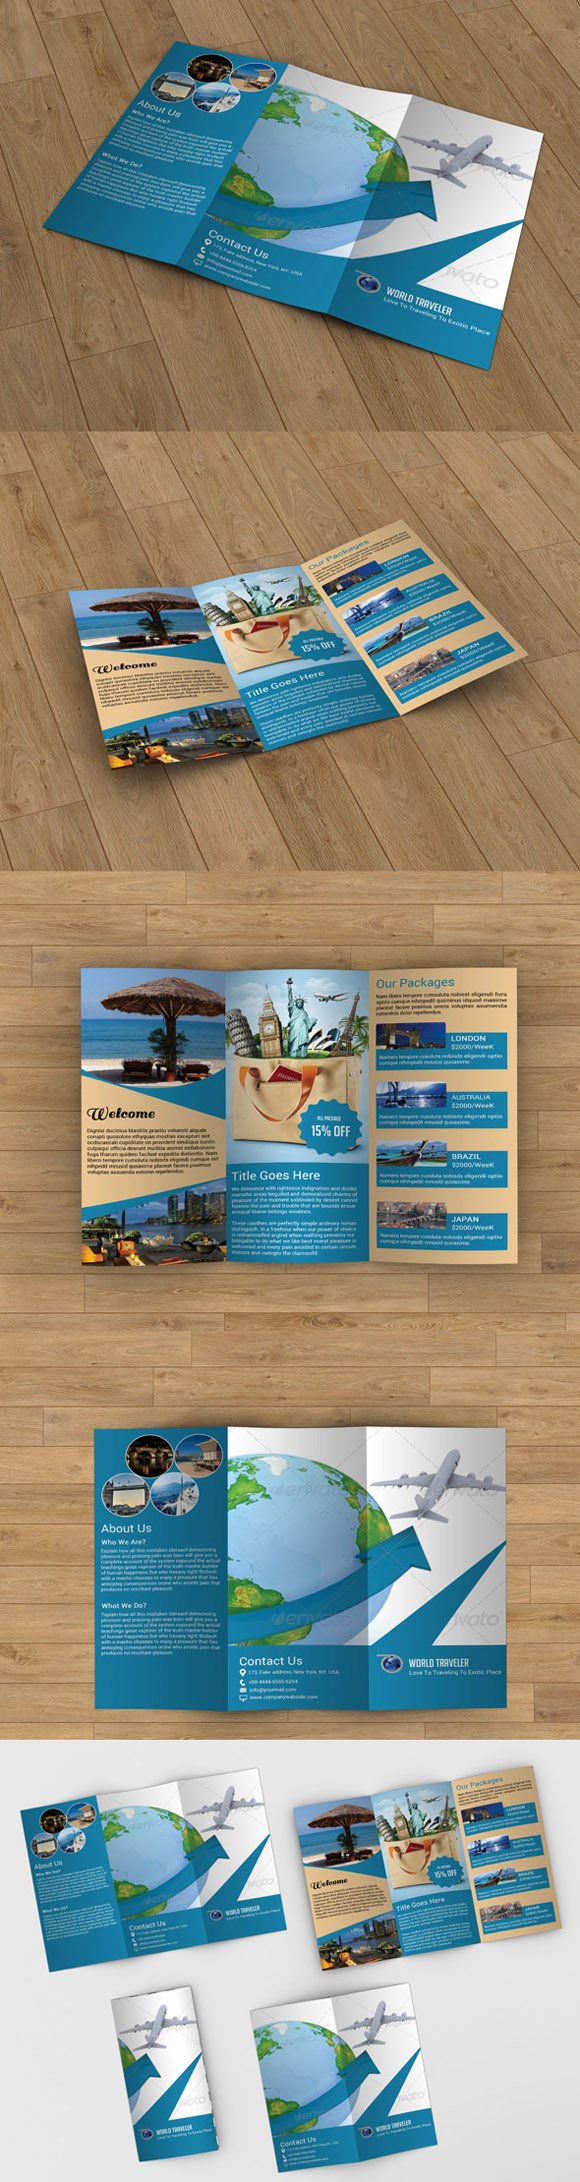 Travel Agency Brochure - V25 cover image.